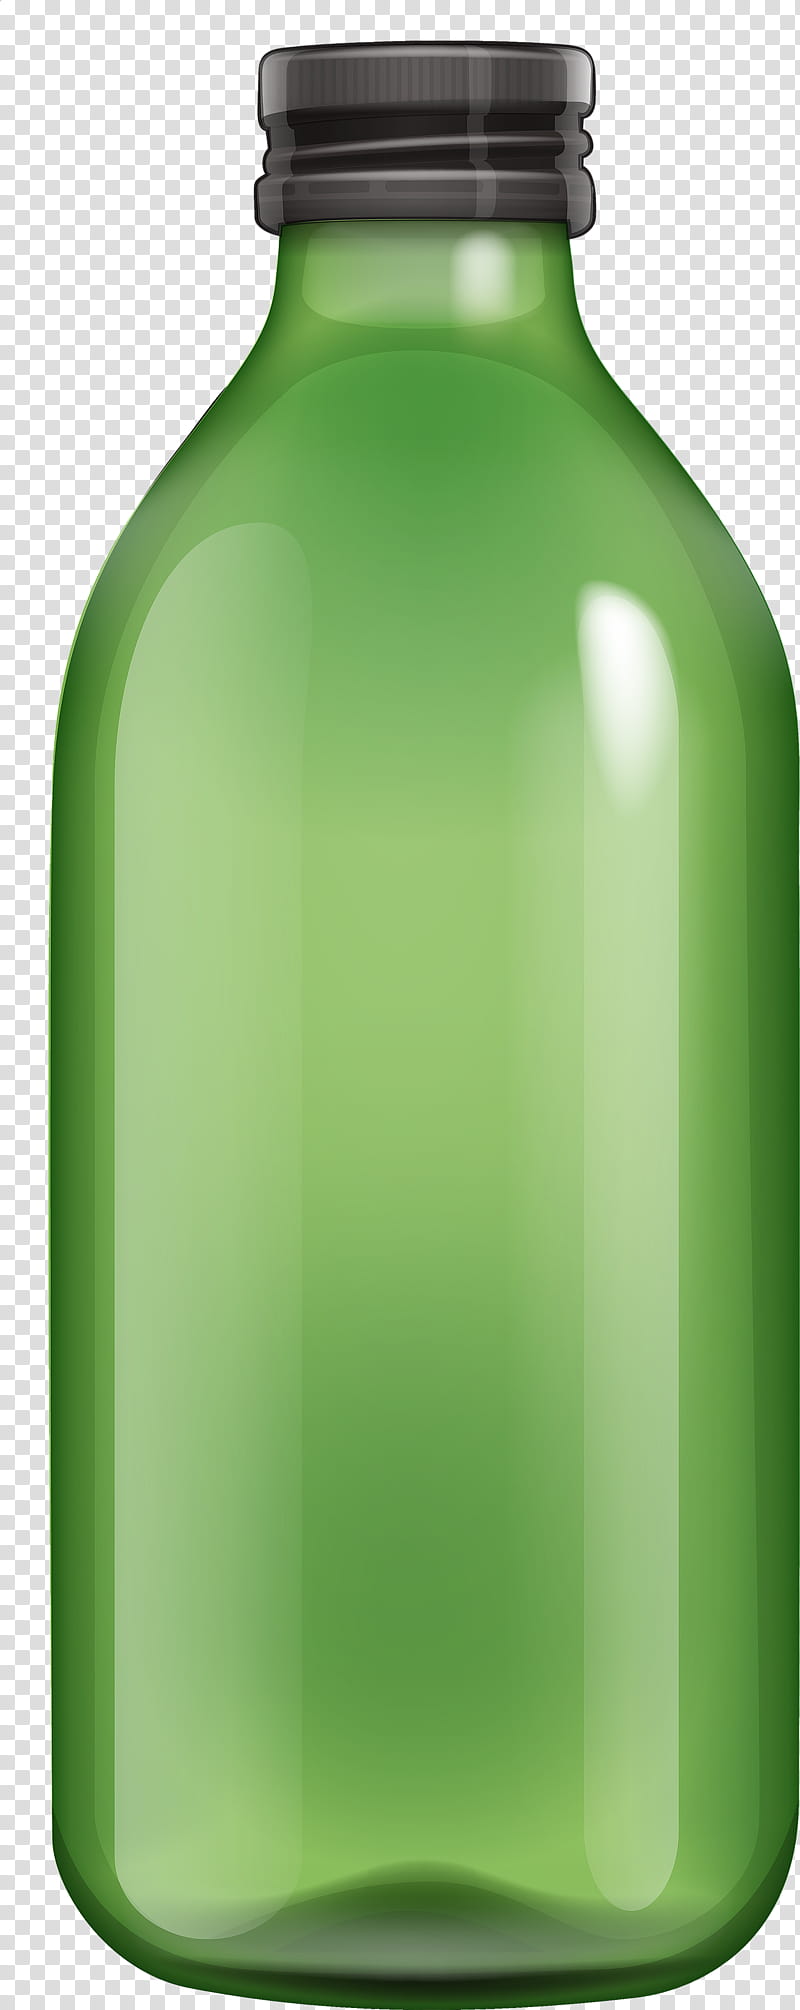 Wine Glass, Bottle, Water Bottles, Plastic Bottle, Drink, Glass Bottle, Soda Bottle, Green transparent background PNG clipart